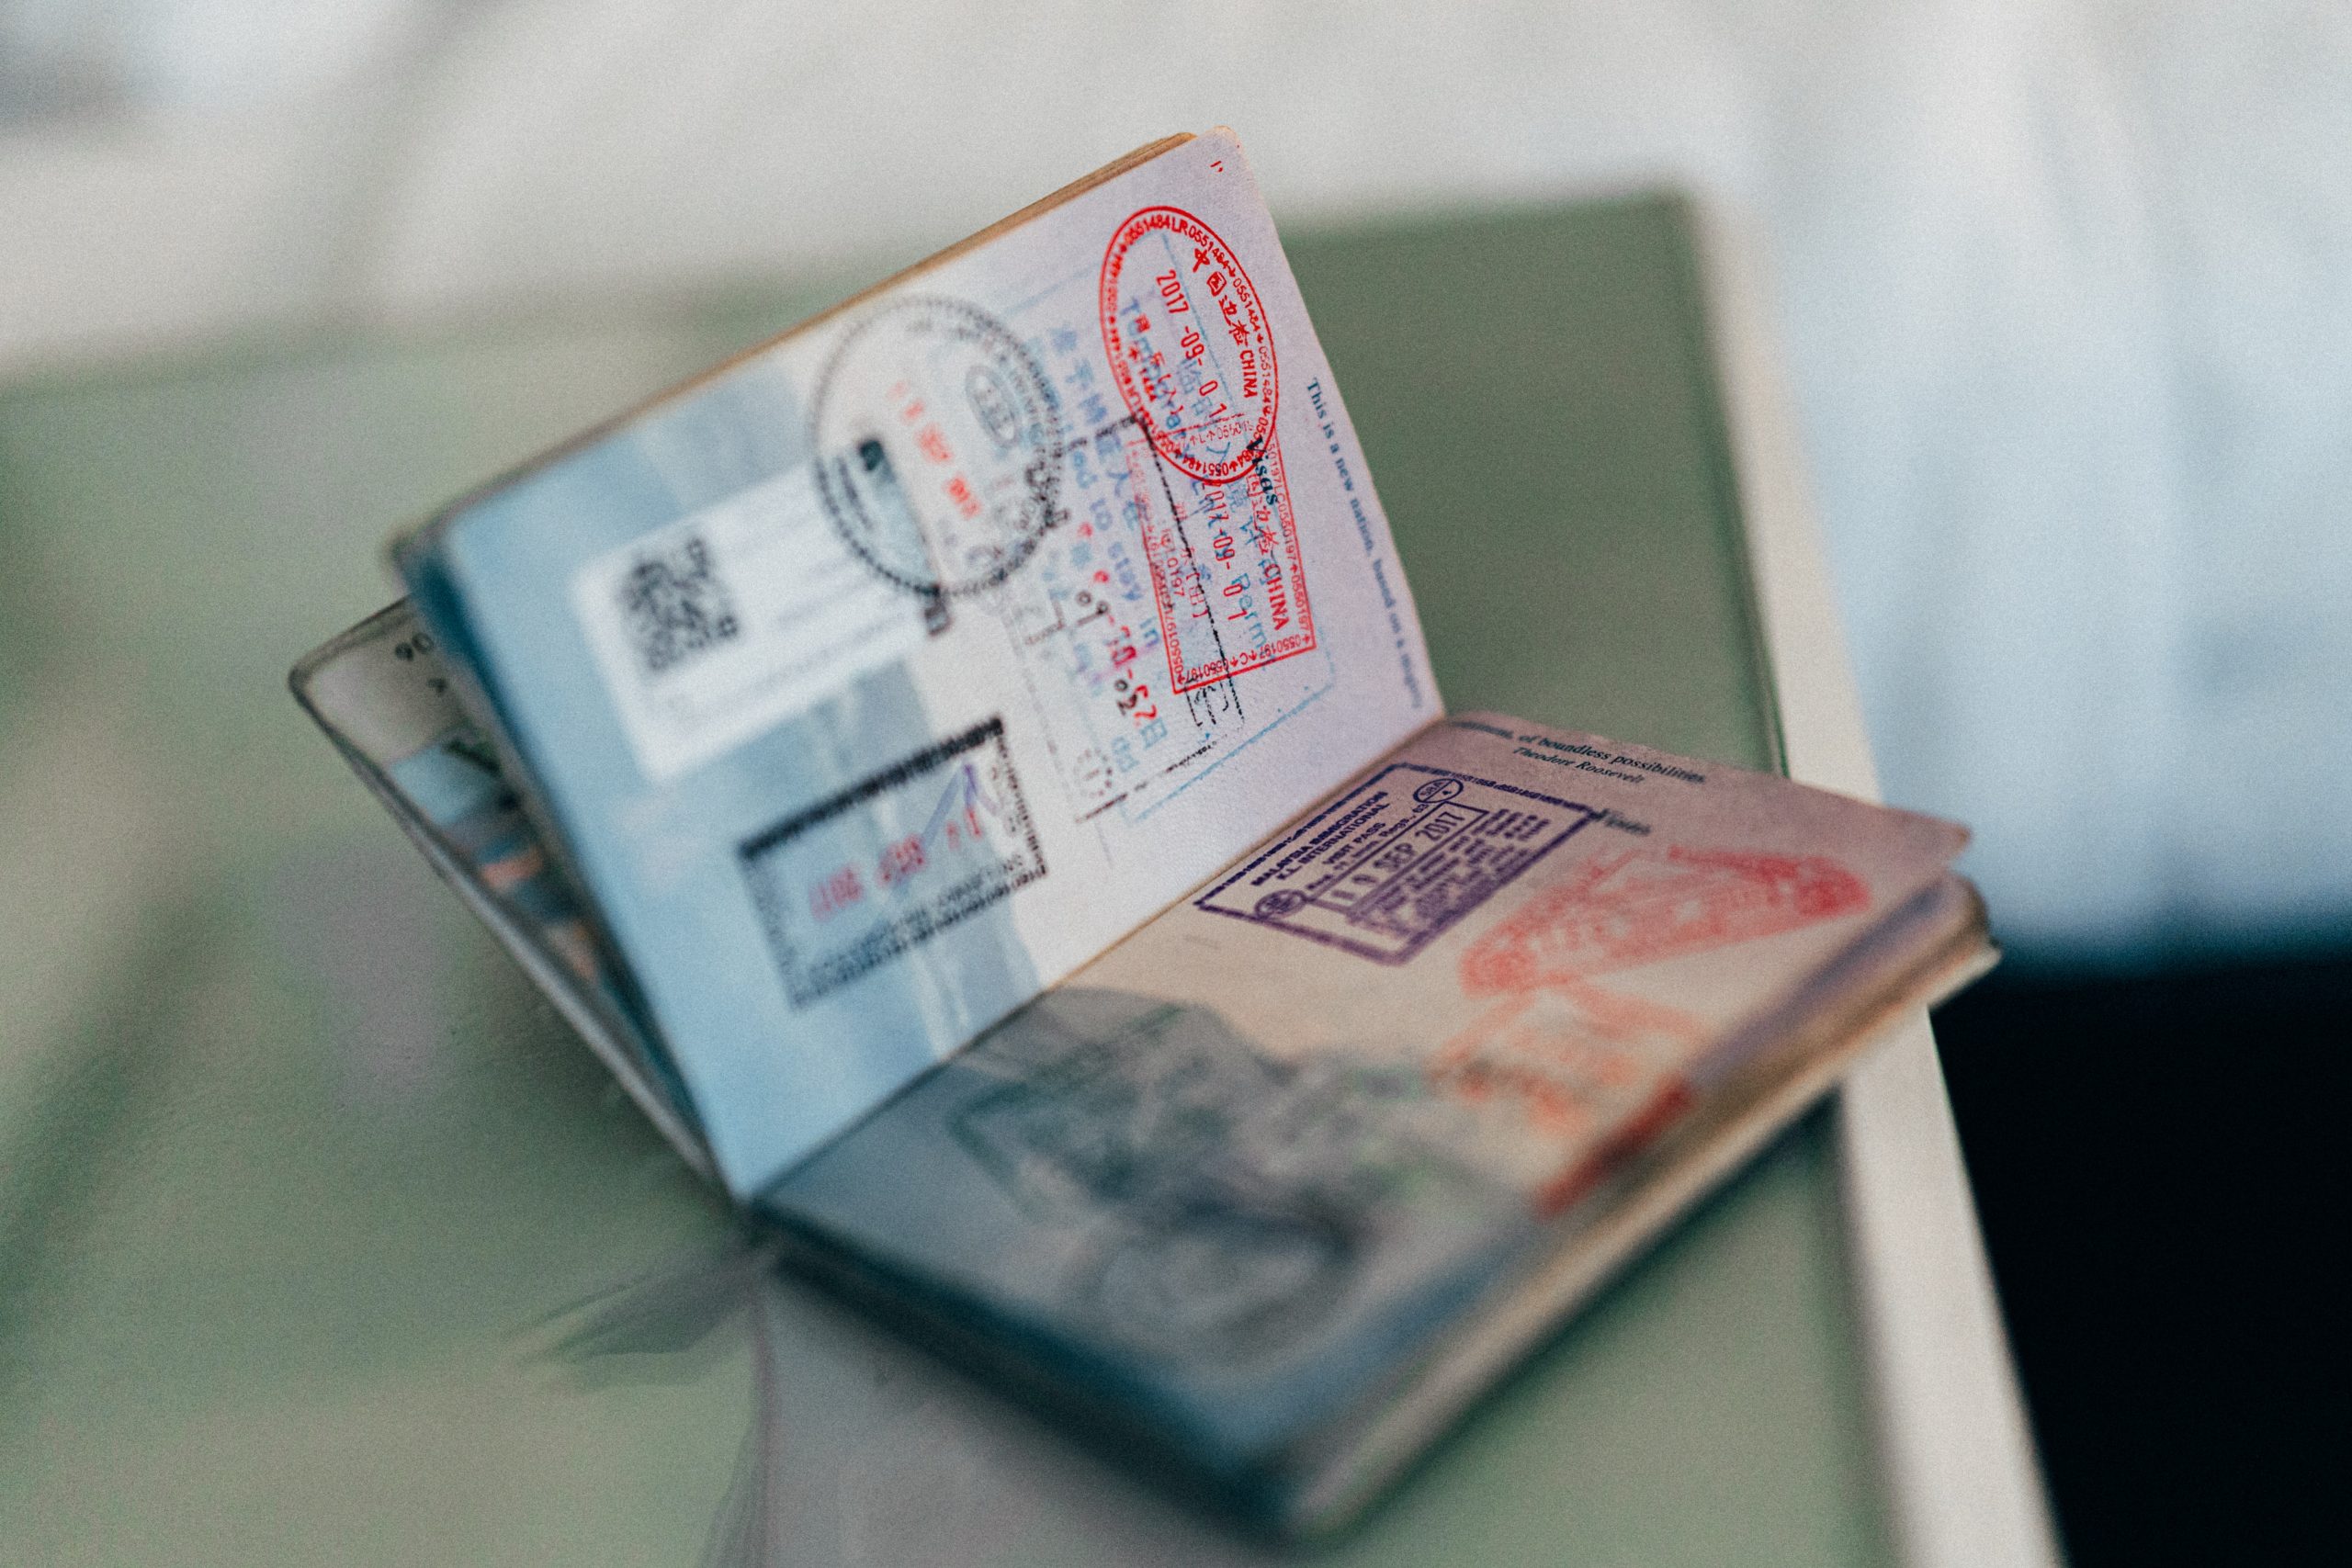 The issue regarding visas and passports arose during the beginning of 2022. Image credit: ConvertKit on Unsplash